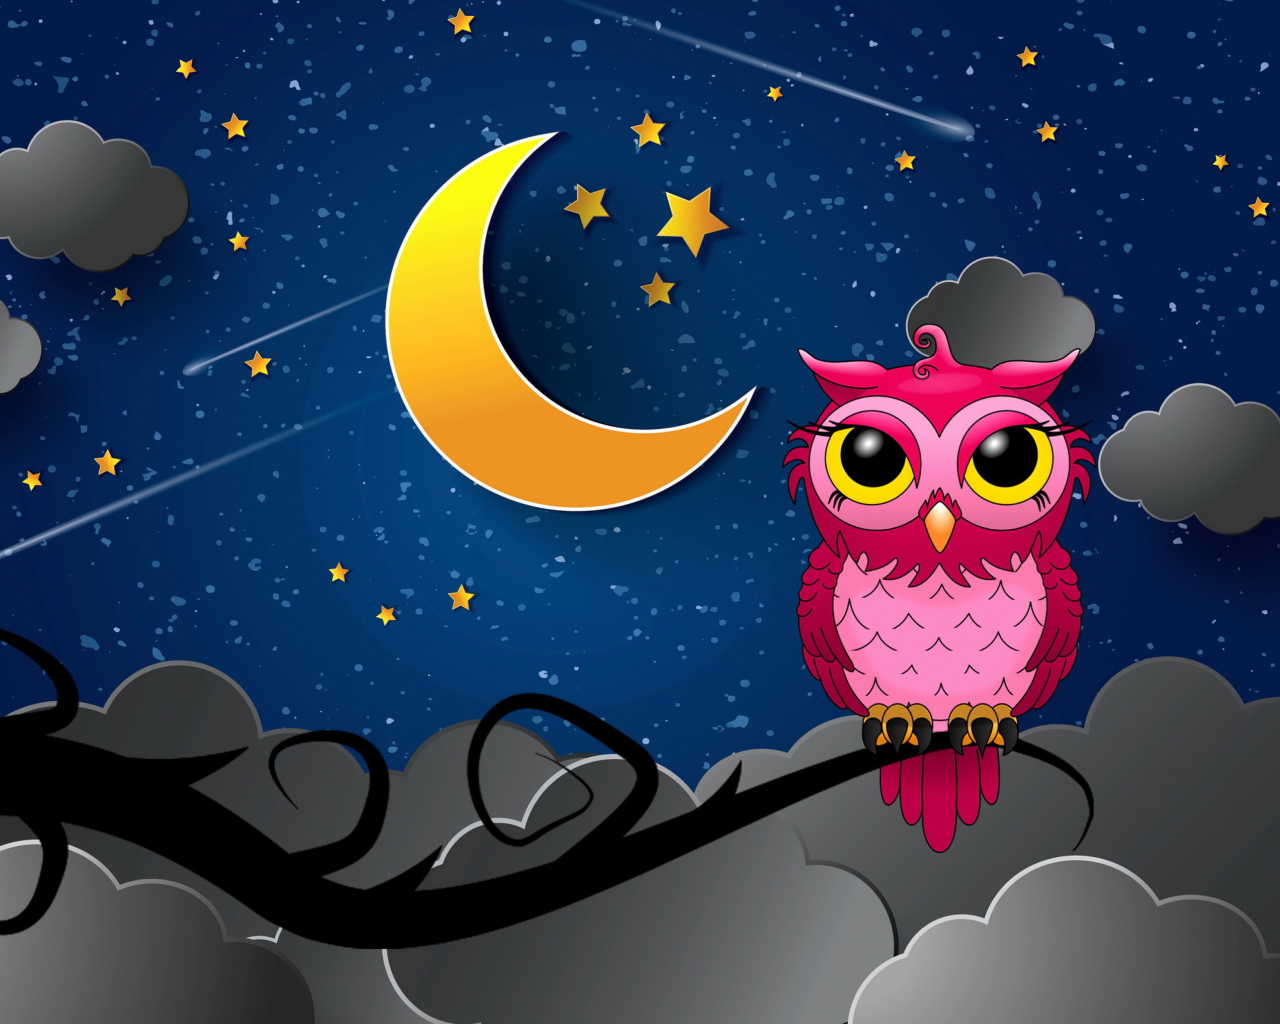 Silent Owl Night wallpaper 1280x1024